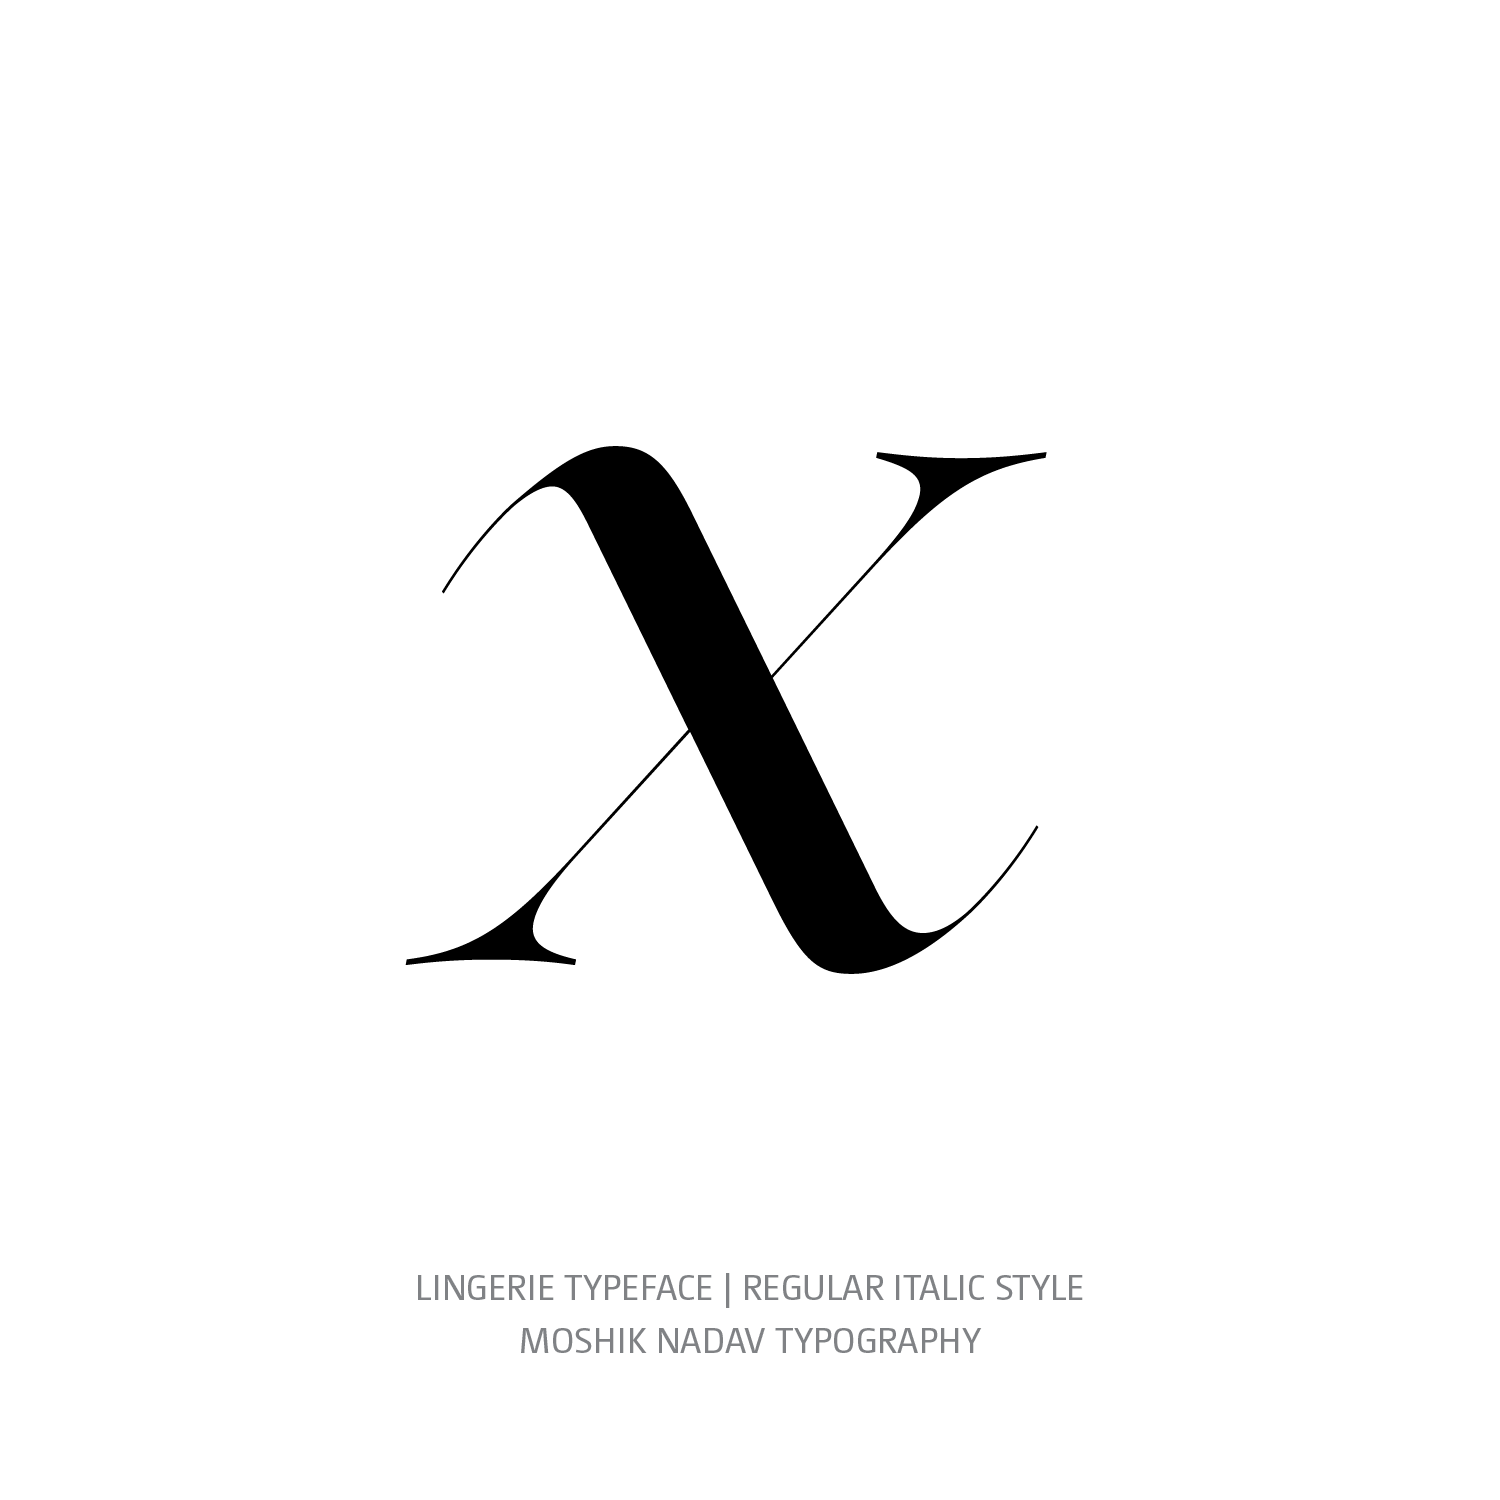 Lingerie Typeface Regular Italic x - Fashion fonts by Moshik Nadav Typography